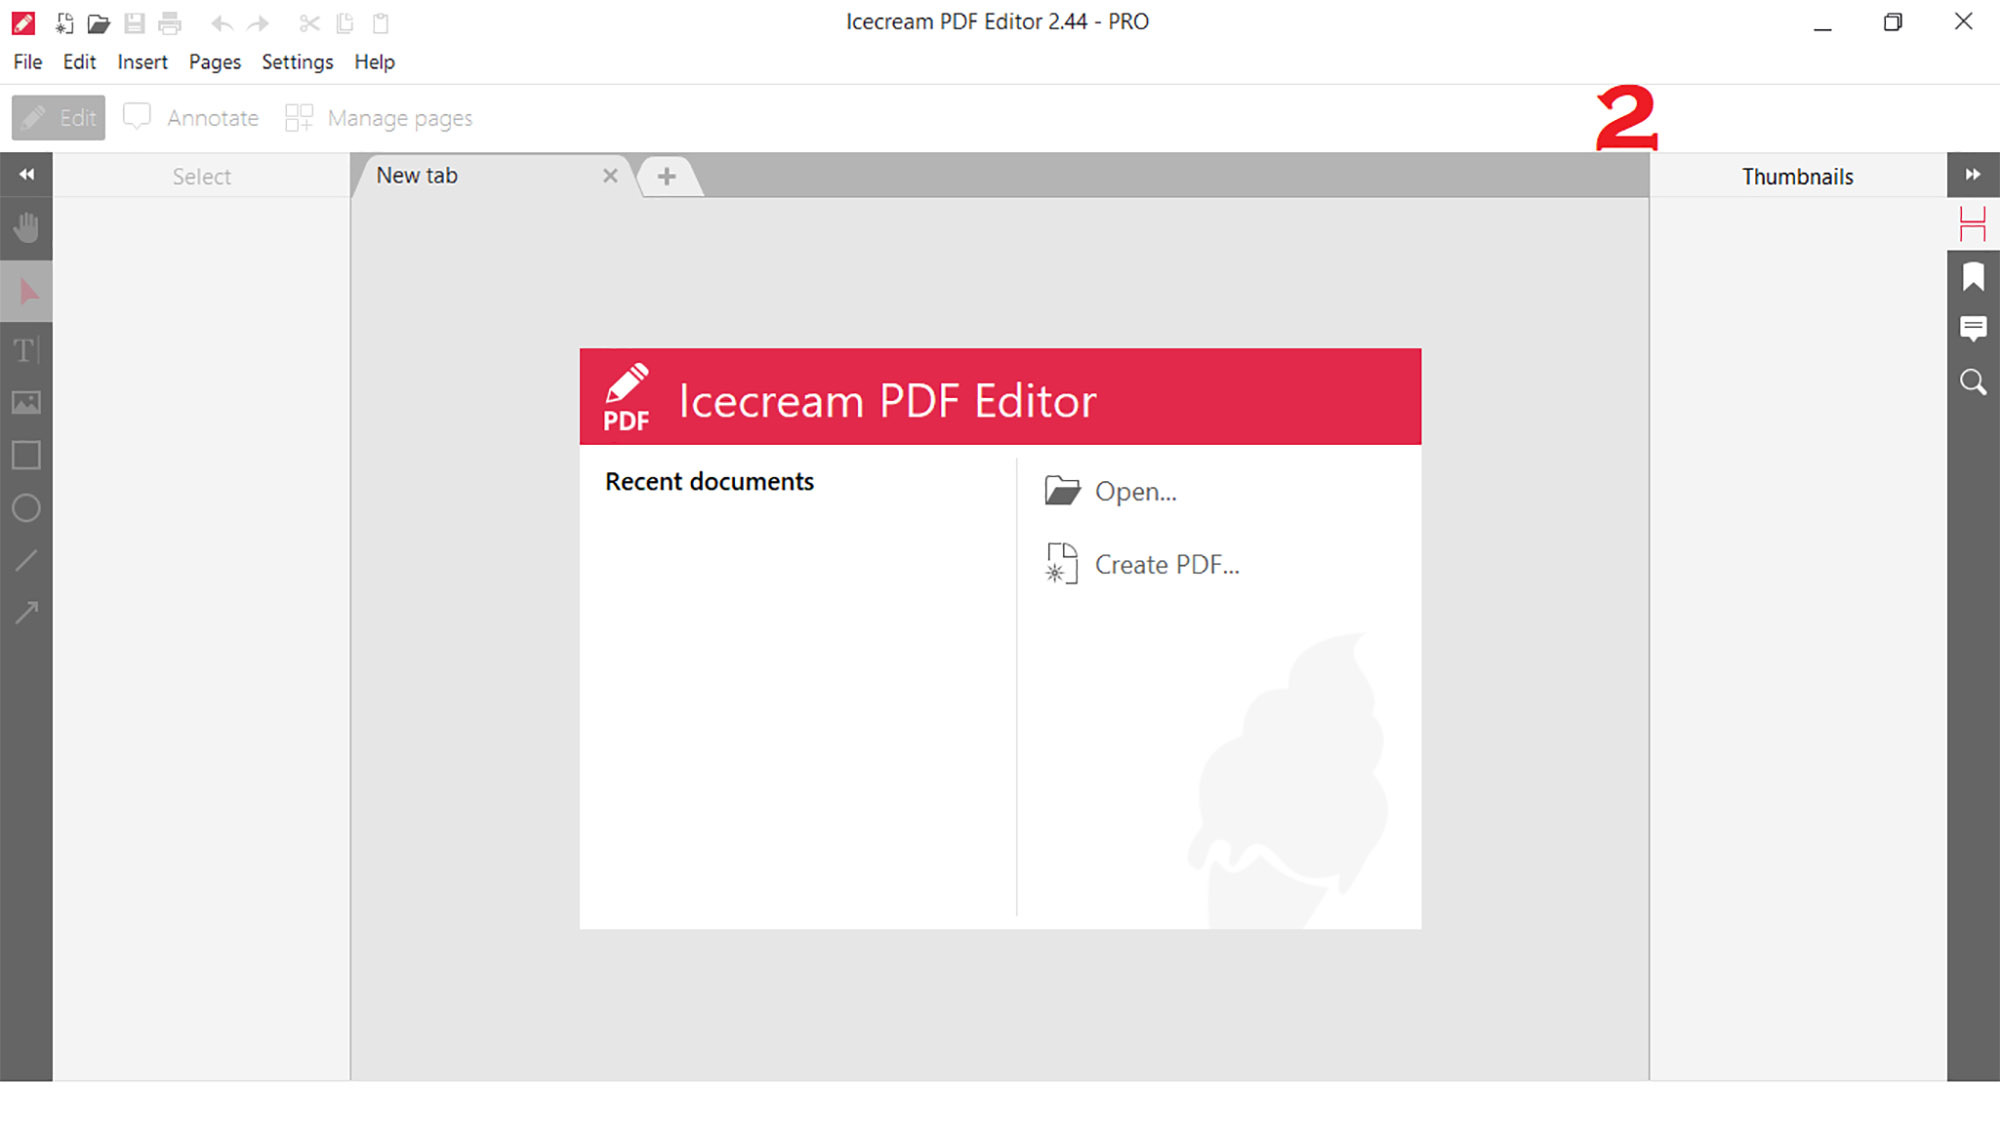 i will do PDF Editor PRO 2022 Software